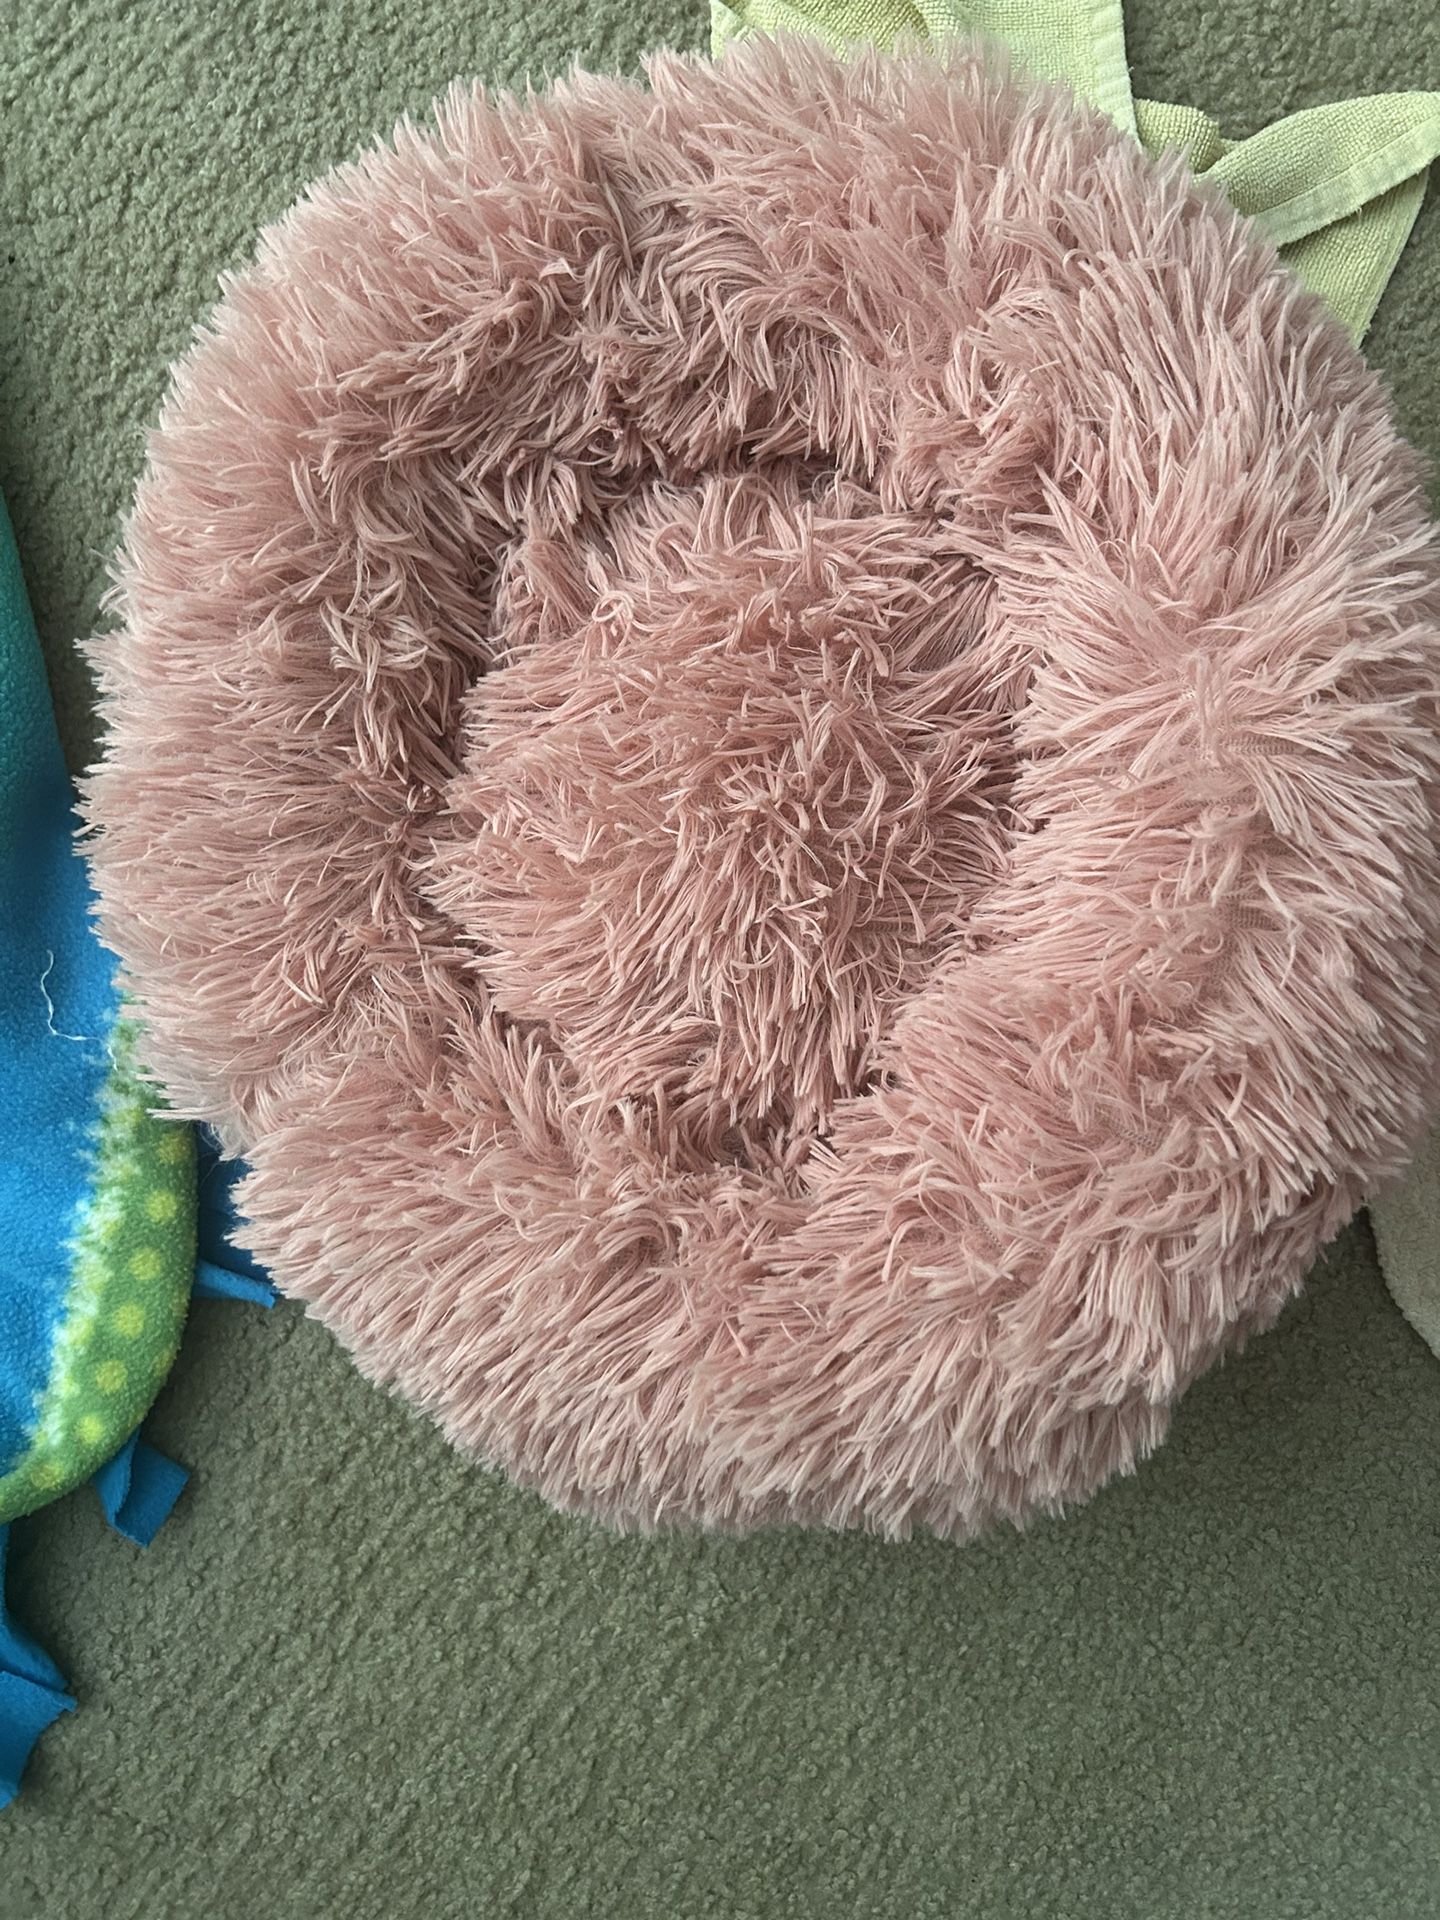 Pink Fuzzy Puppy Bed 